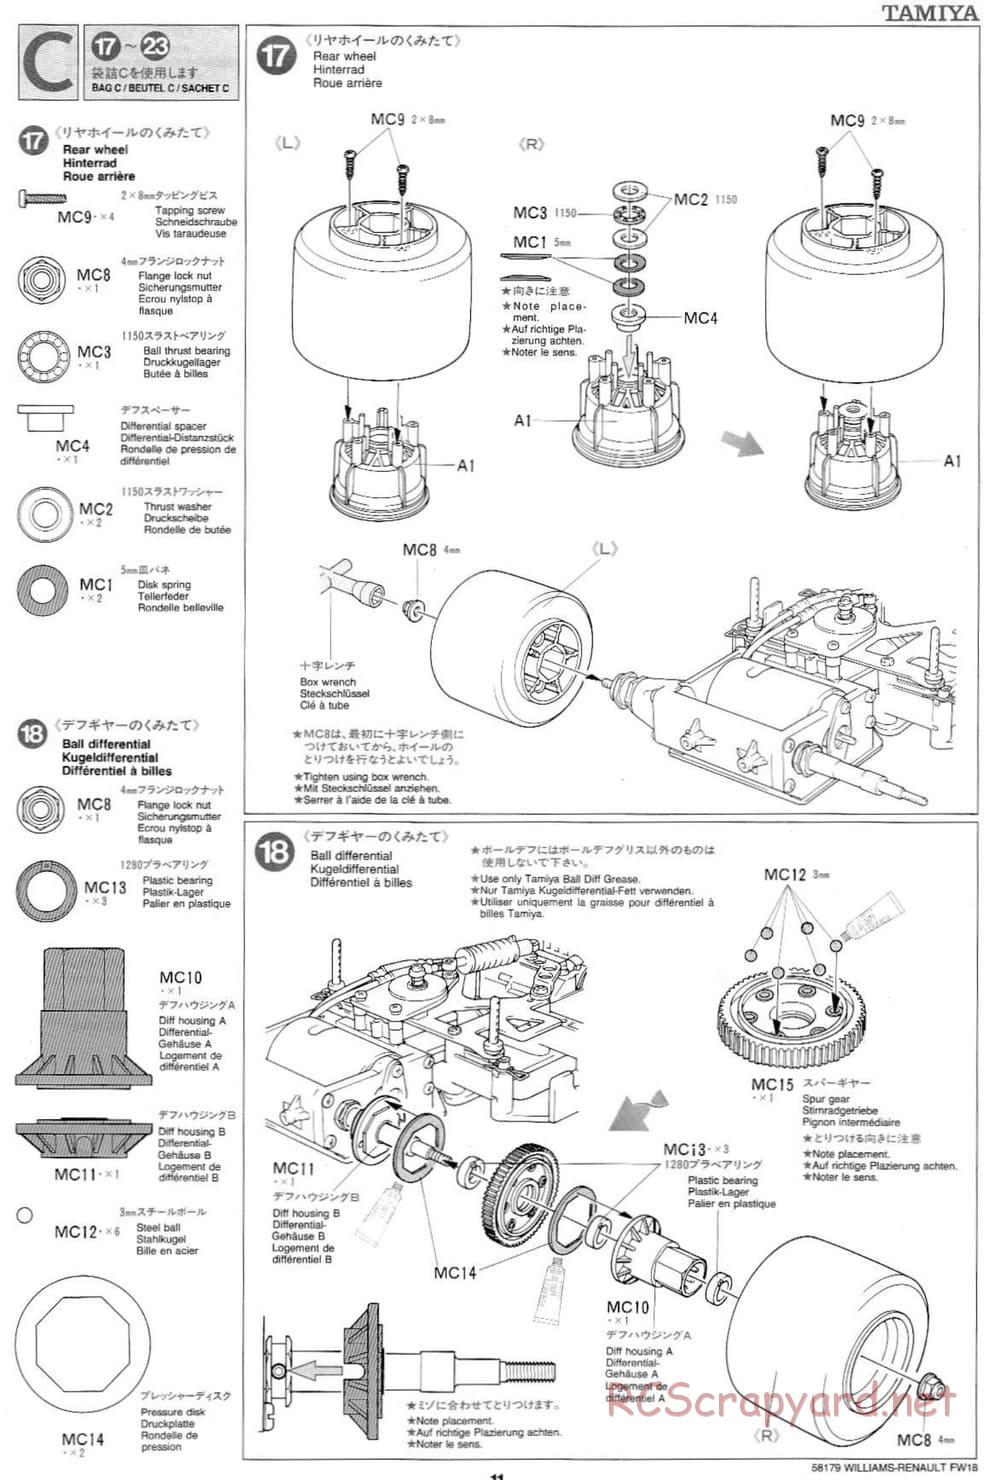 Tamiya - Williams Renault FW18 - F103RS Chassis - Manual - Page 11